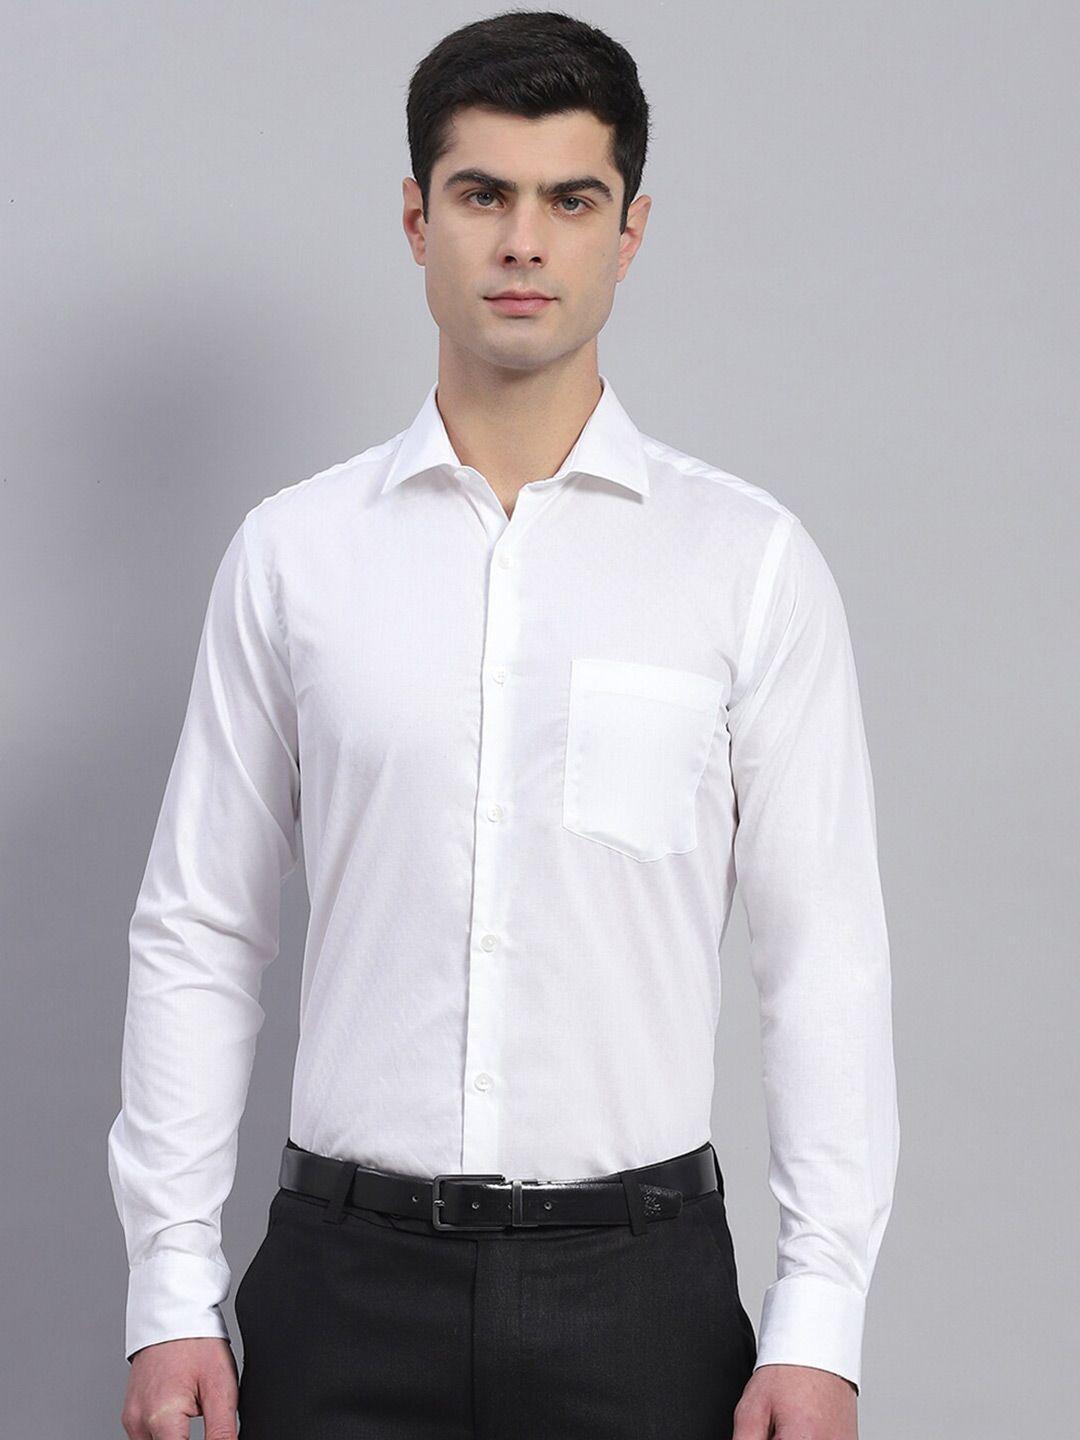 monte carlo classic spread collar long sleeves cotton casual shirt